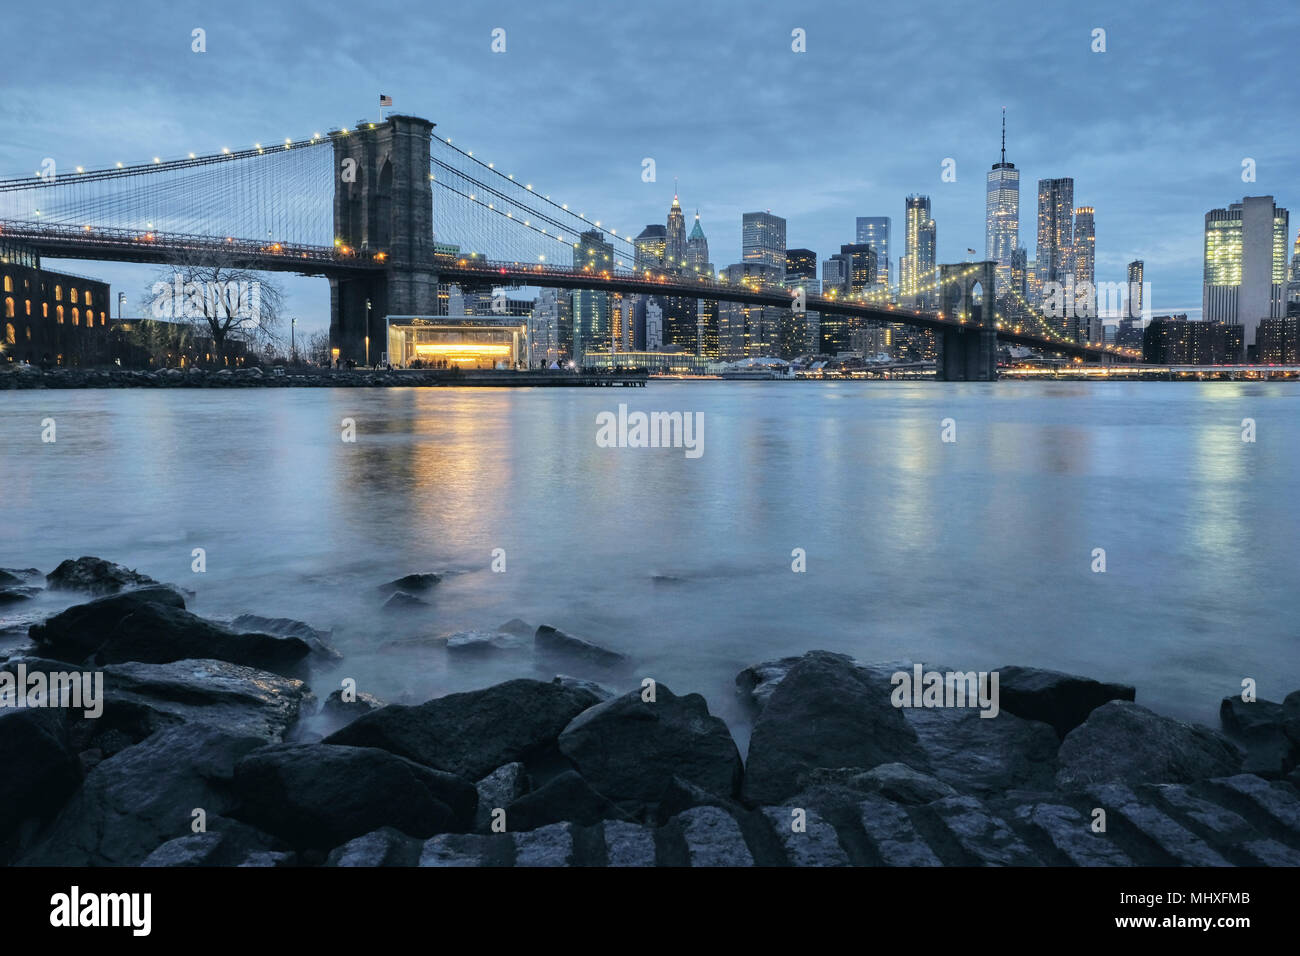 Vue urbaine avec pont de Brooklyn et Manhattan skyline at Dusk, New York, USA Banque D'Images